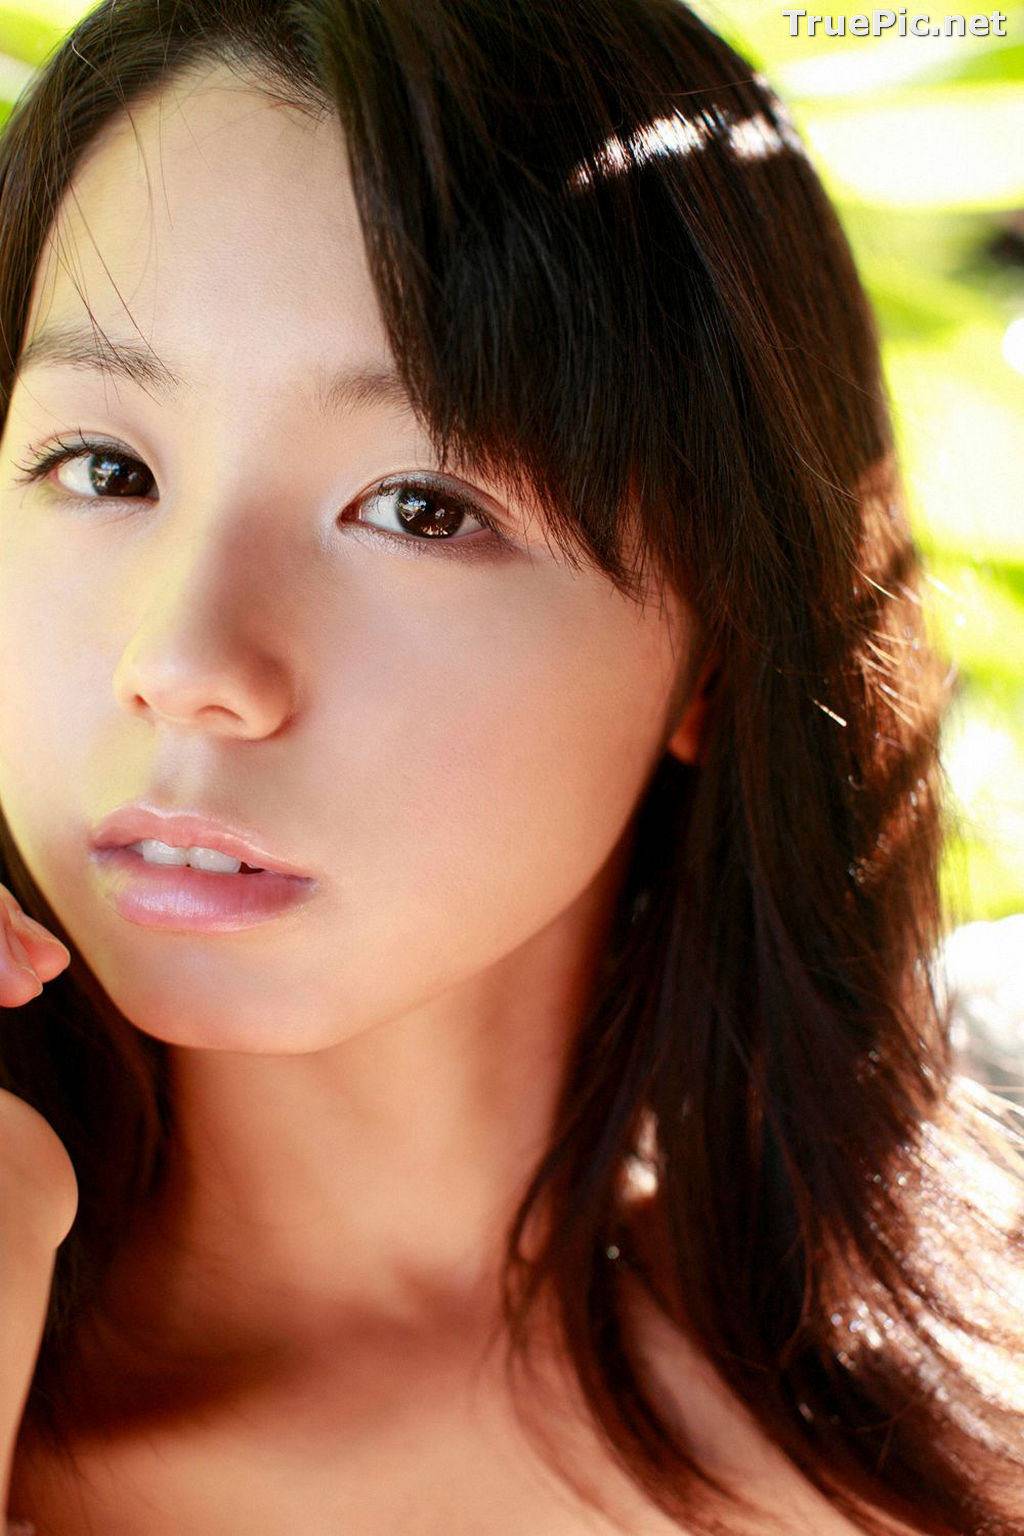 Image [YS Web] Vol.482 - Japanese actress Rina Koike - Graduation Side Story - TruePic.net - Picture-40